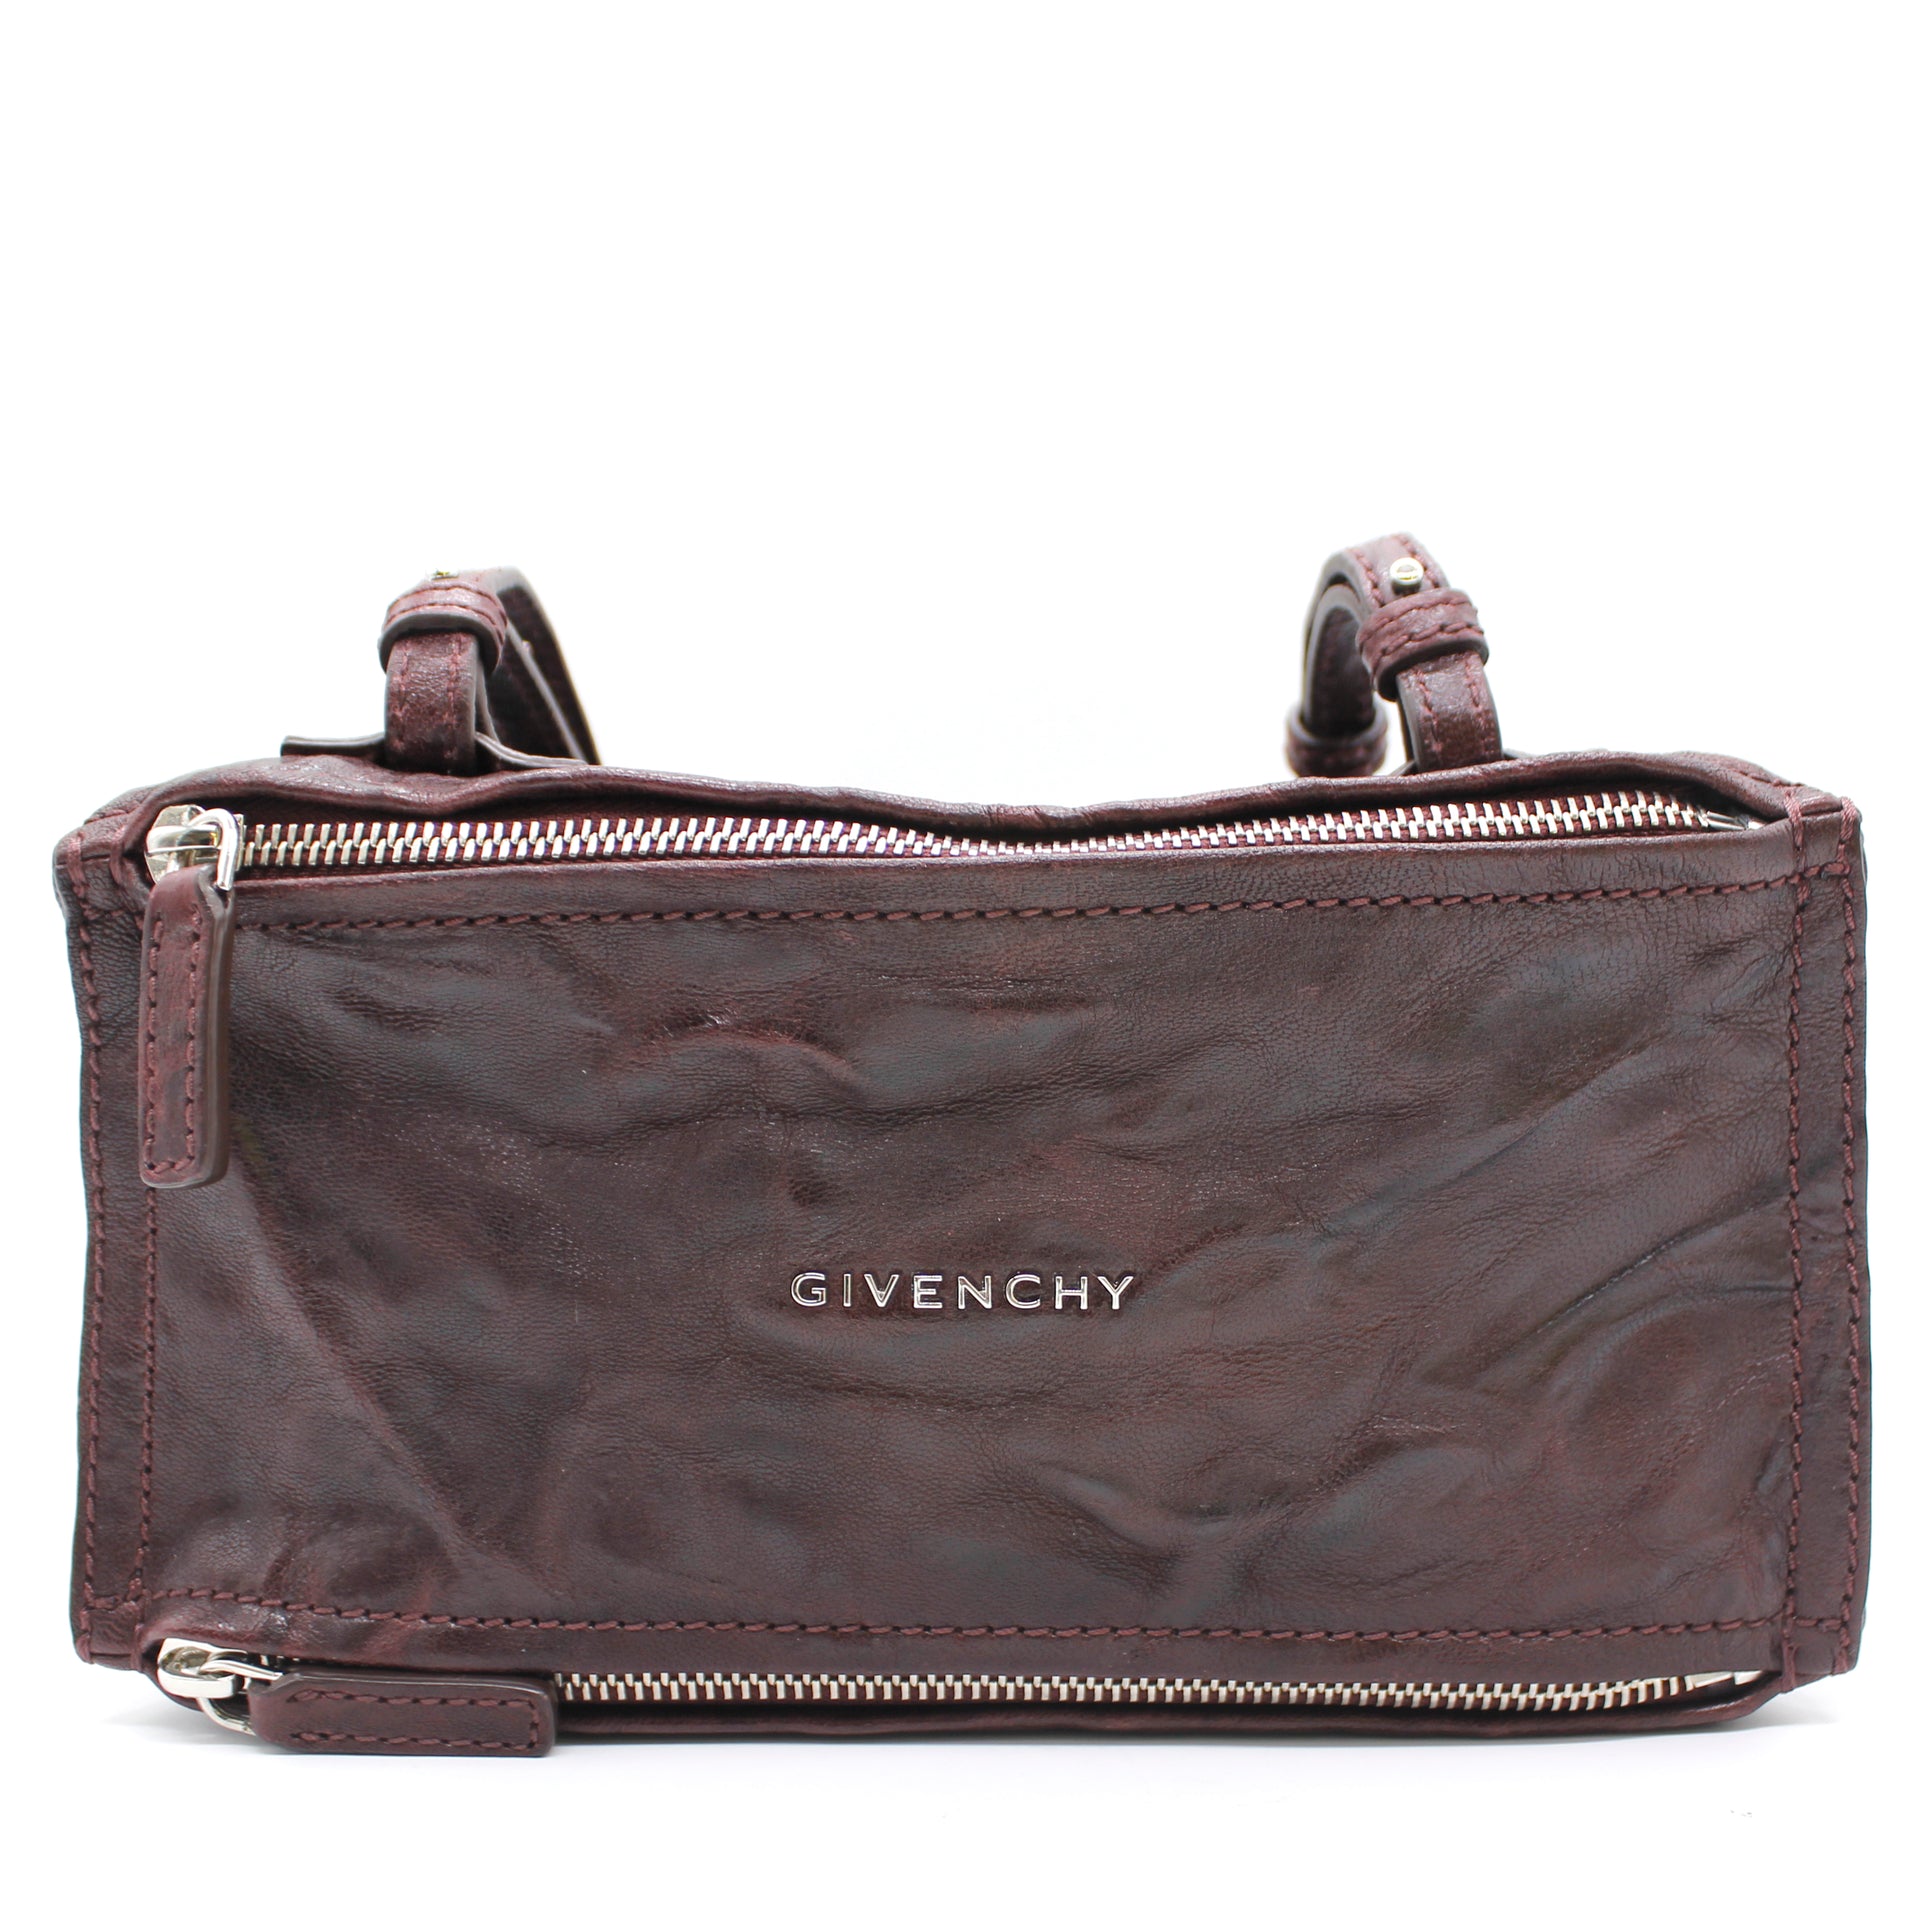 Givenchy 'Pandora' bag